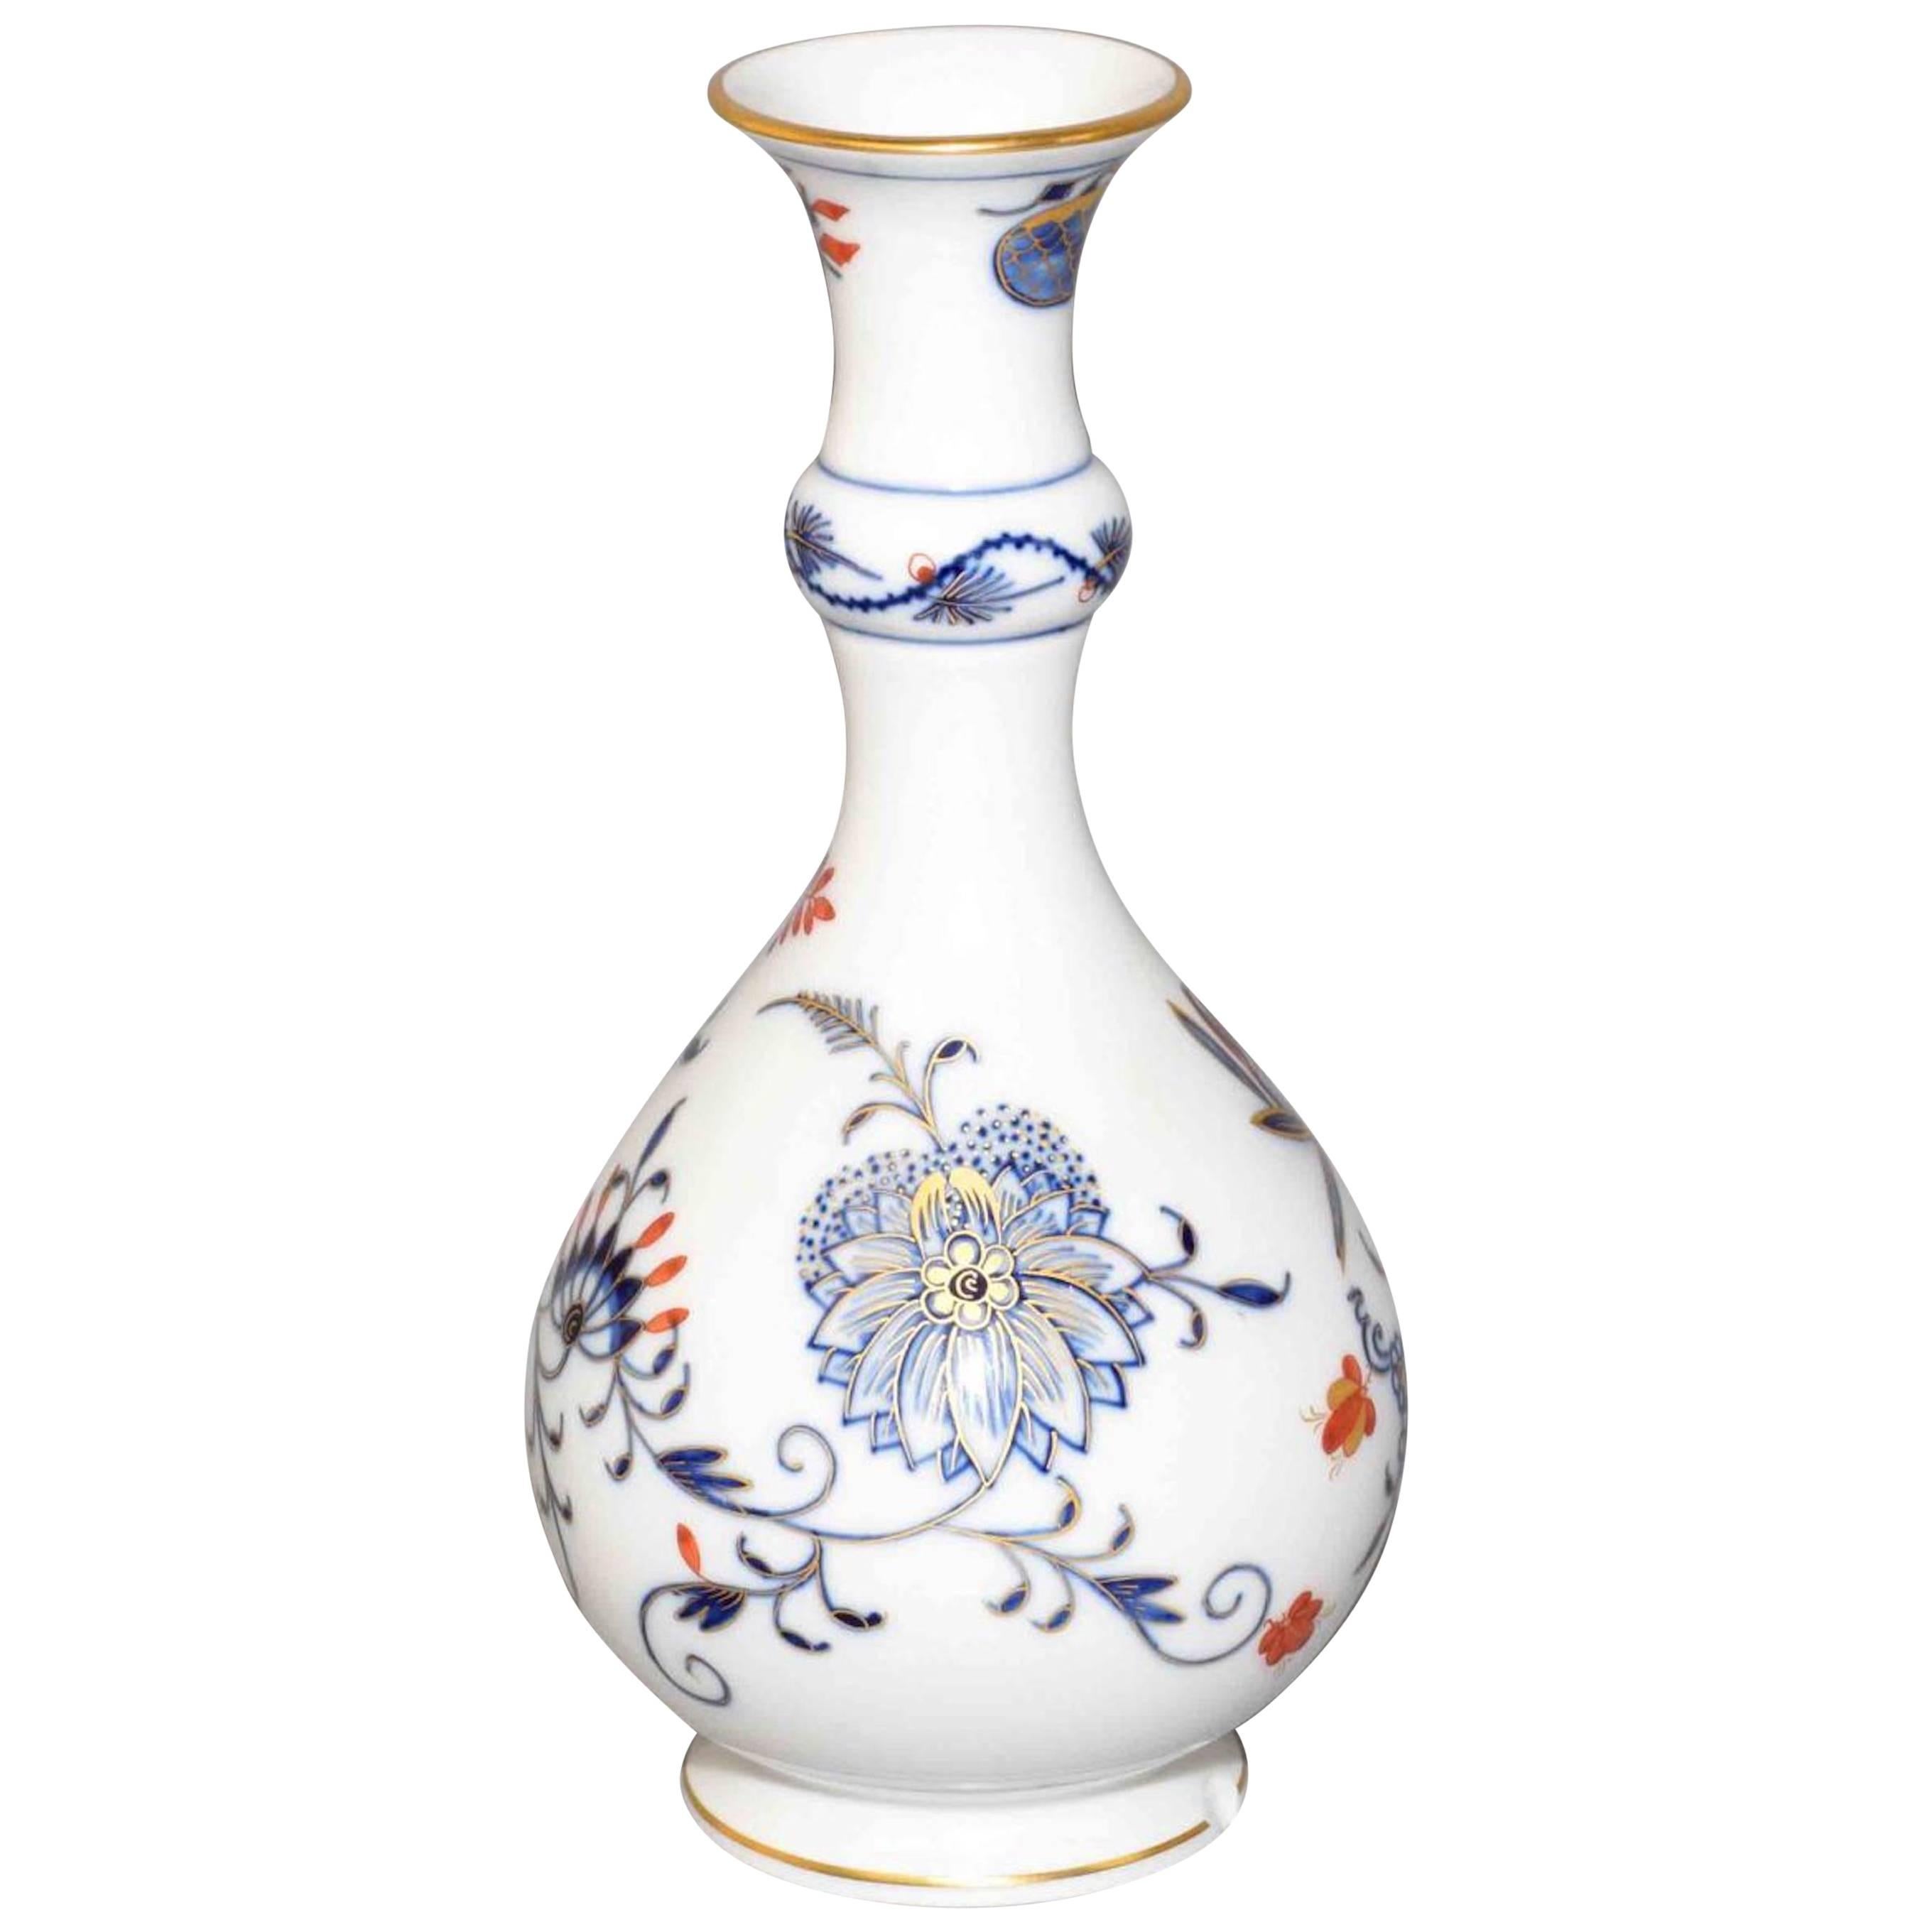 19th Century Meissen Porcelain Floral Design Bottle Vase